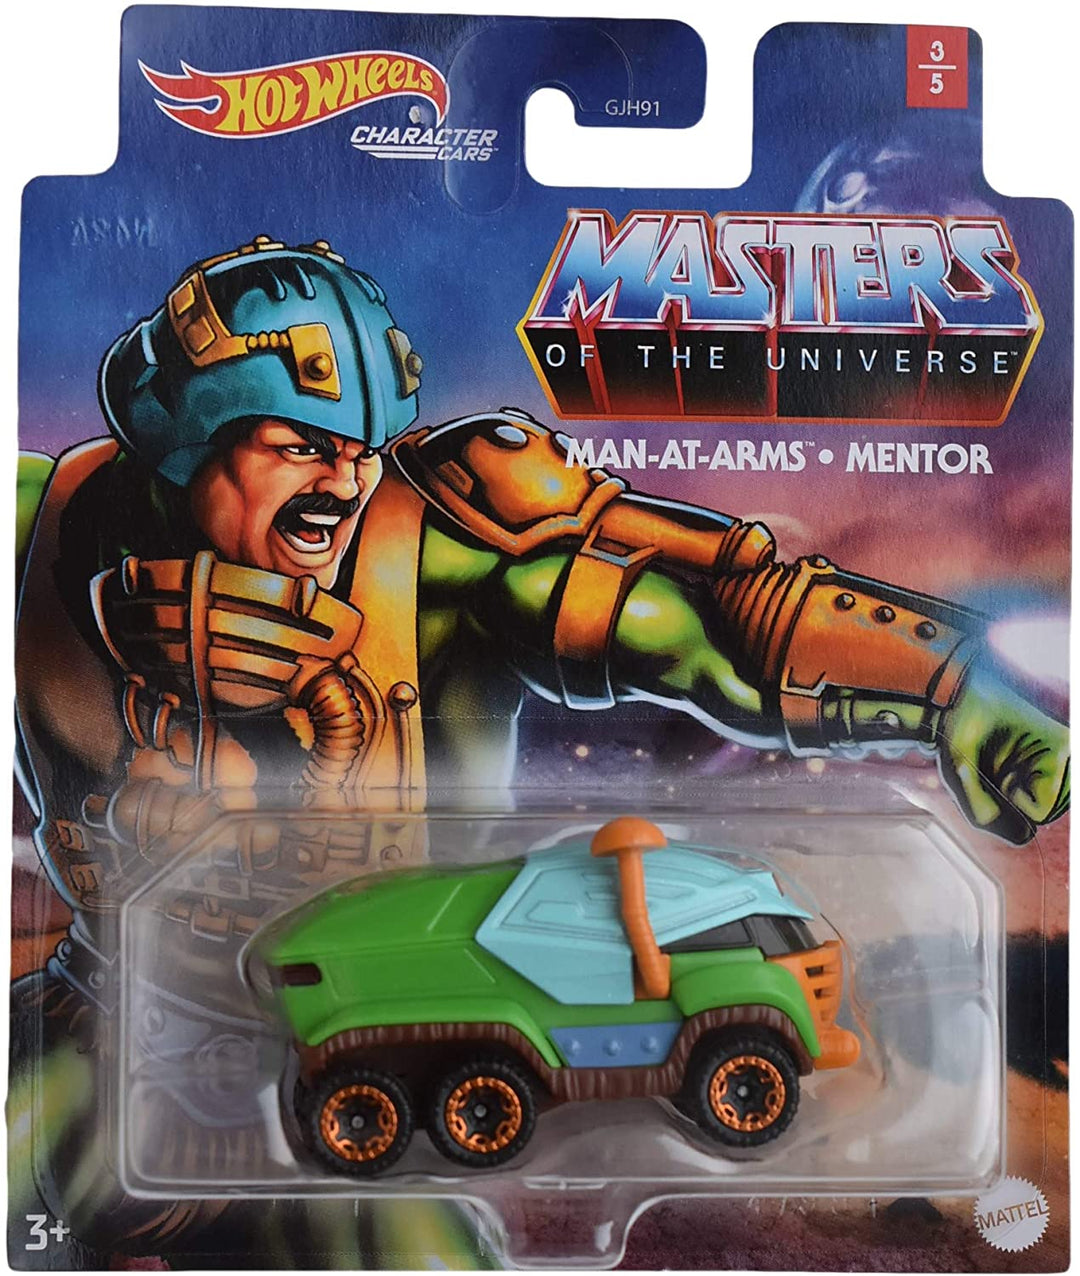 Karakter Cars Hot Wheels Masters of The Universe - Auto Voertuig - Man at Arms Mentor - Gegoten schaal 1:64